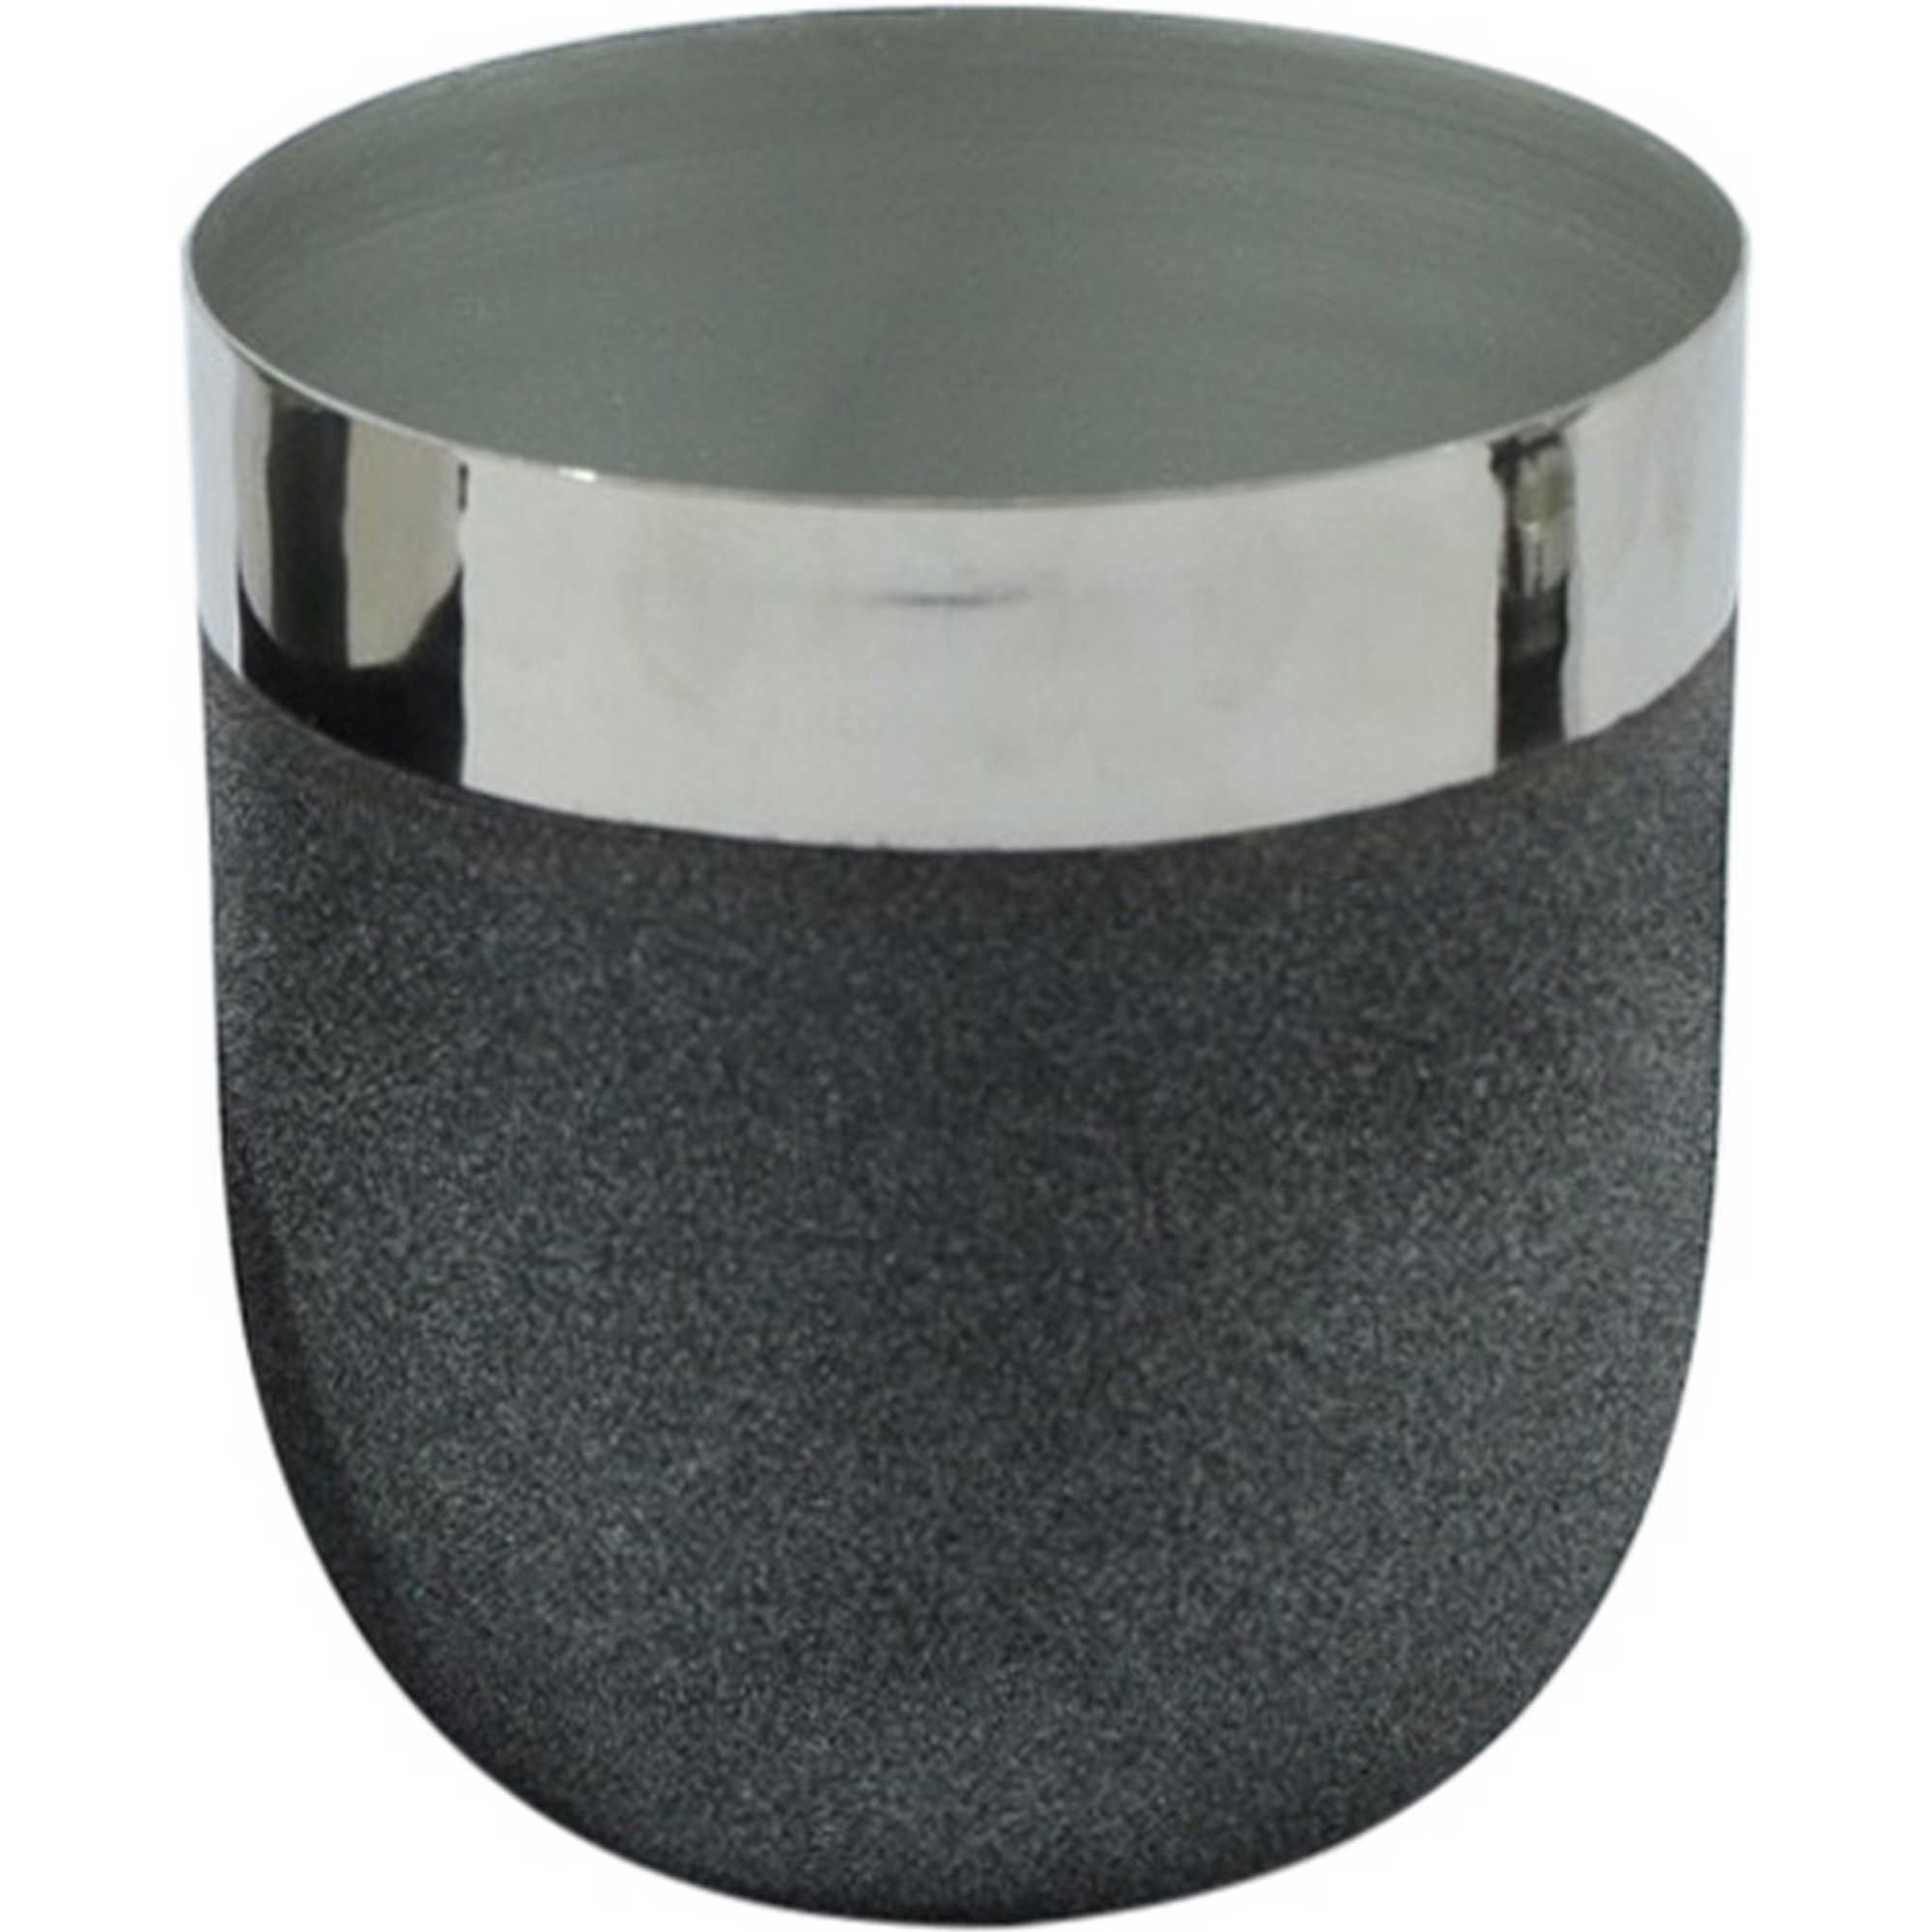 Metallübertopf lackiert grau mit Silberrand 15 x 15 cm + product picture